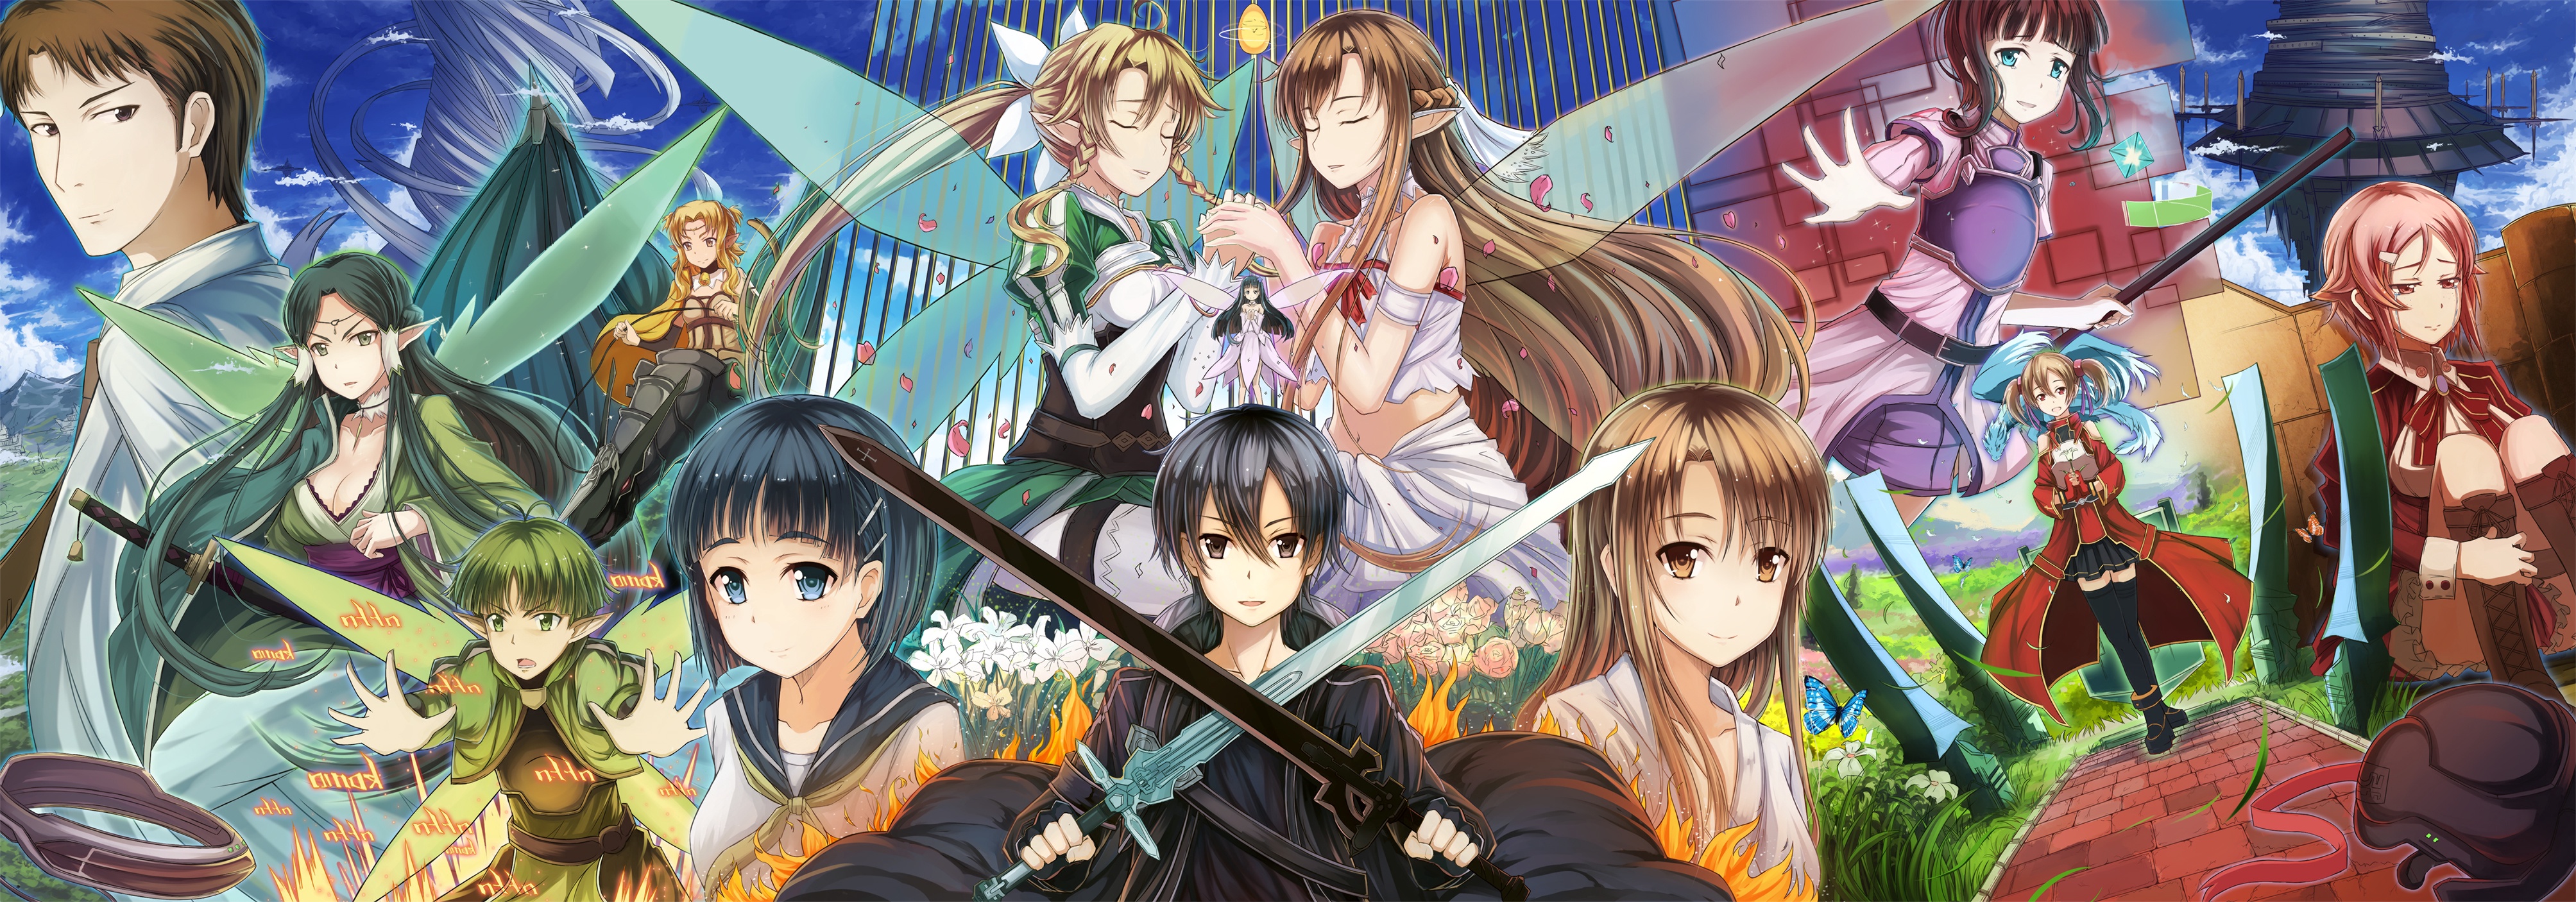 Lisbeth Sword Art Online HD Wallpaper Background Image